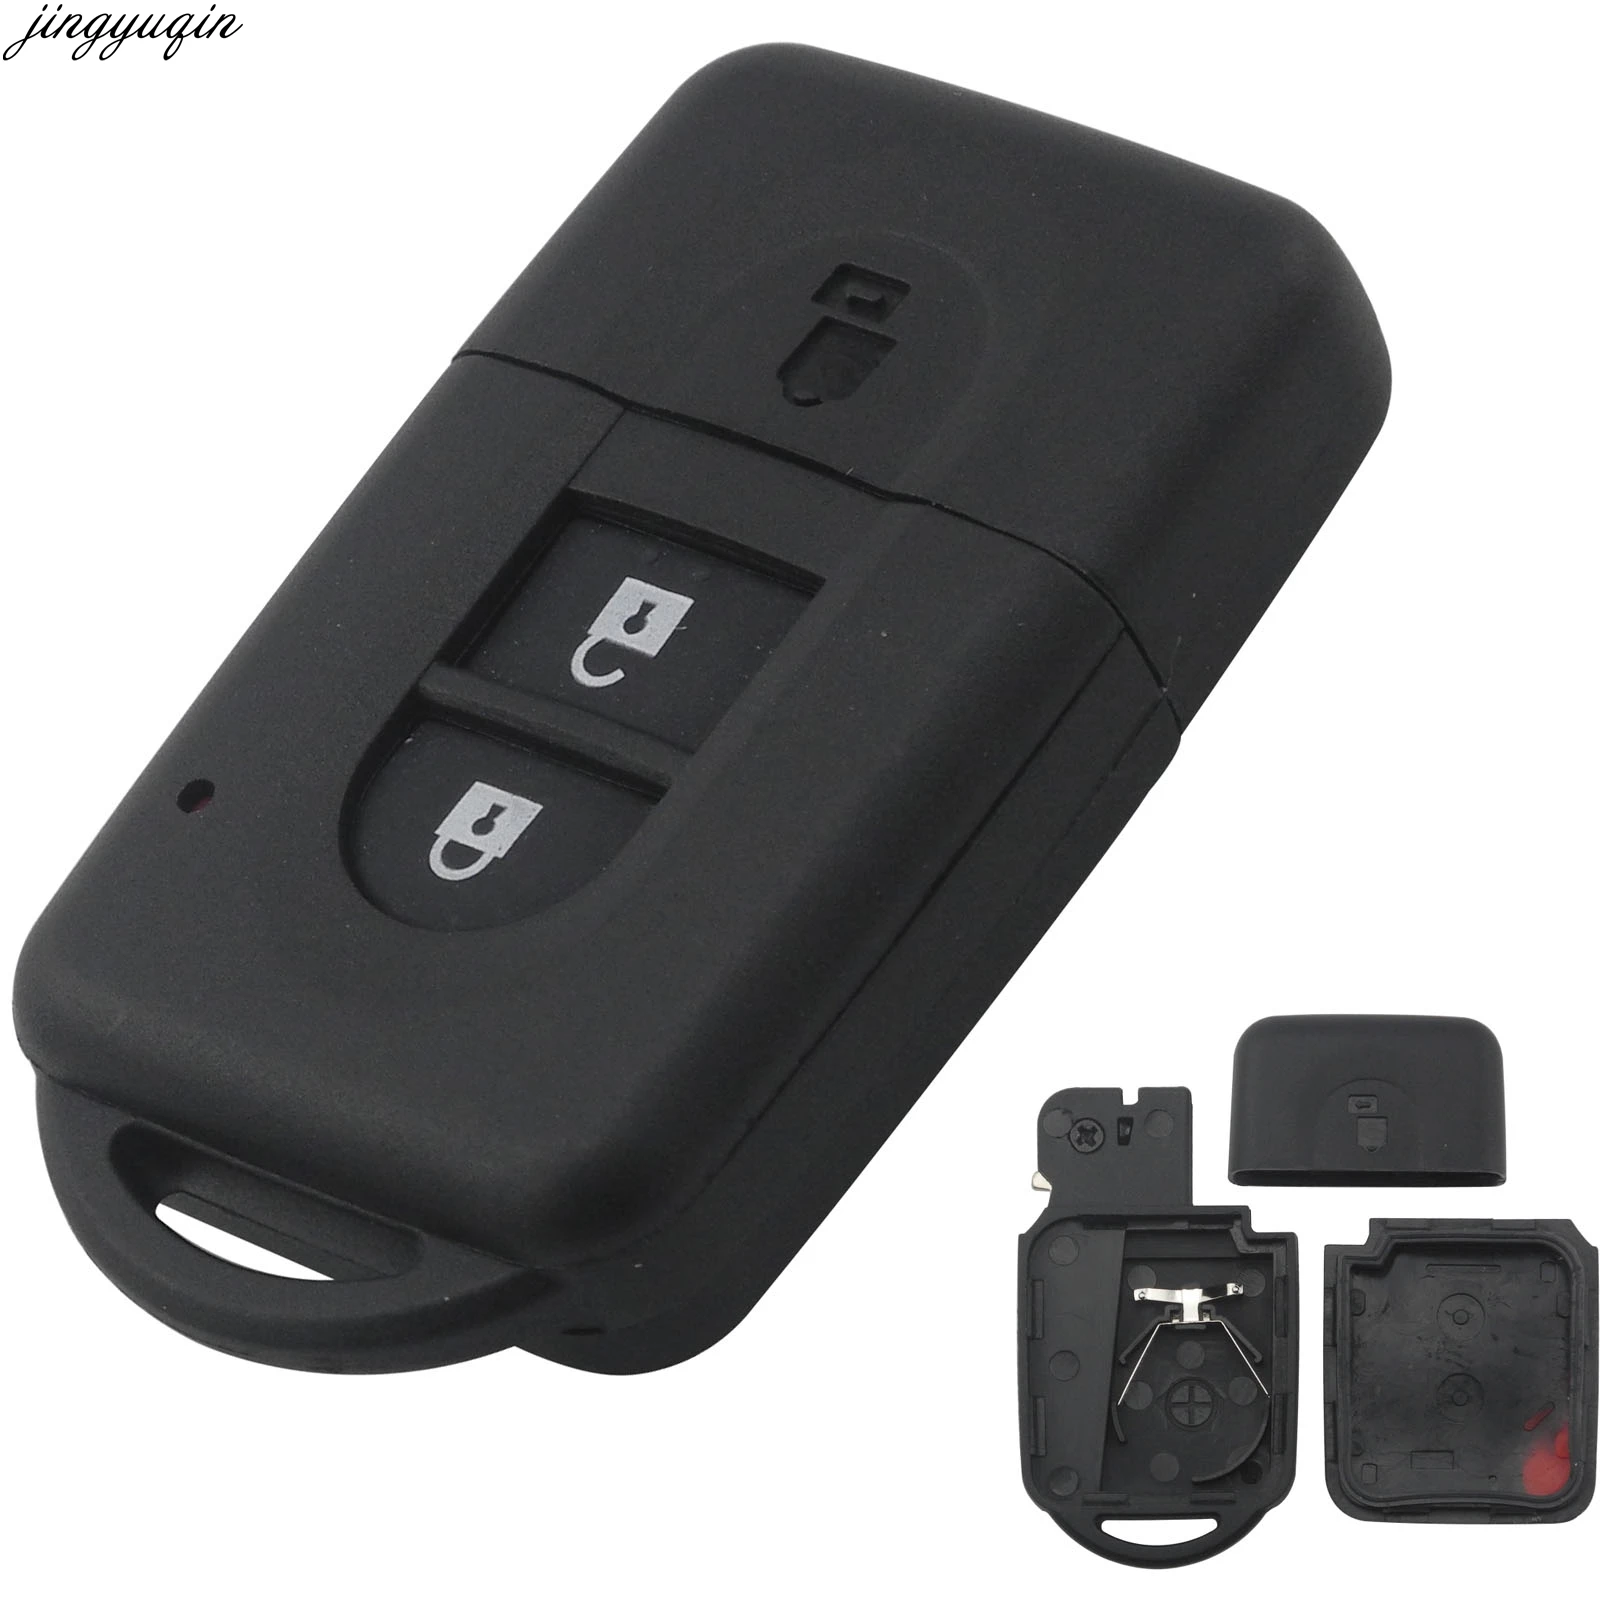 

Jingyuqin 2 Button New Replacement Remote Car Key Shell Fob Case For Nissan MICRA Xtrail QASHQAI JUKE DUKE NAVARA